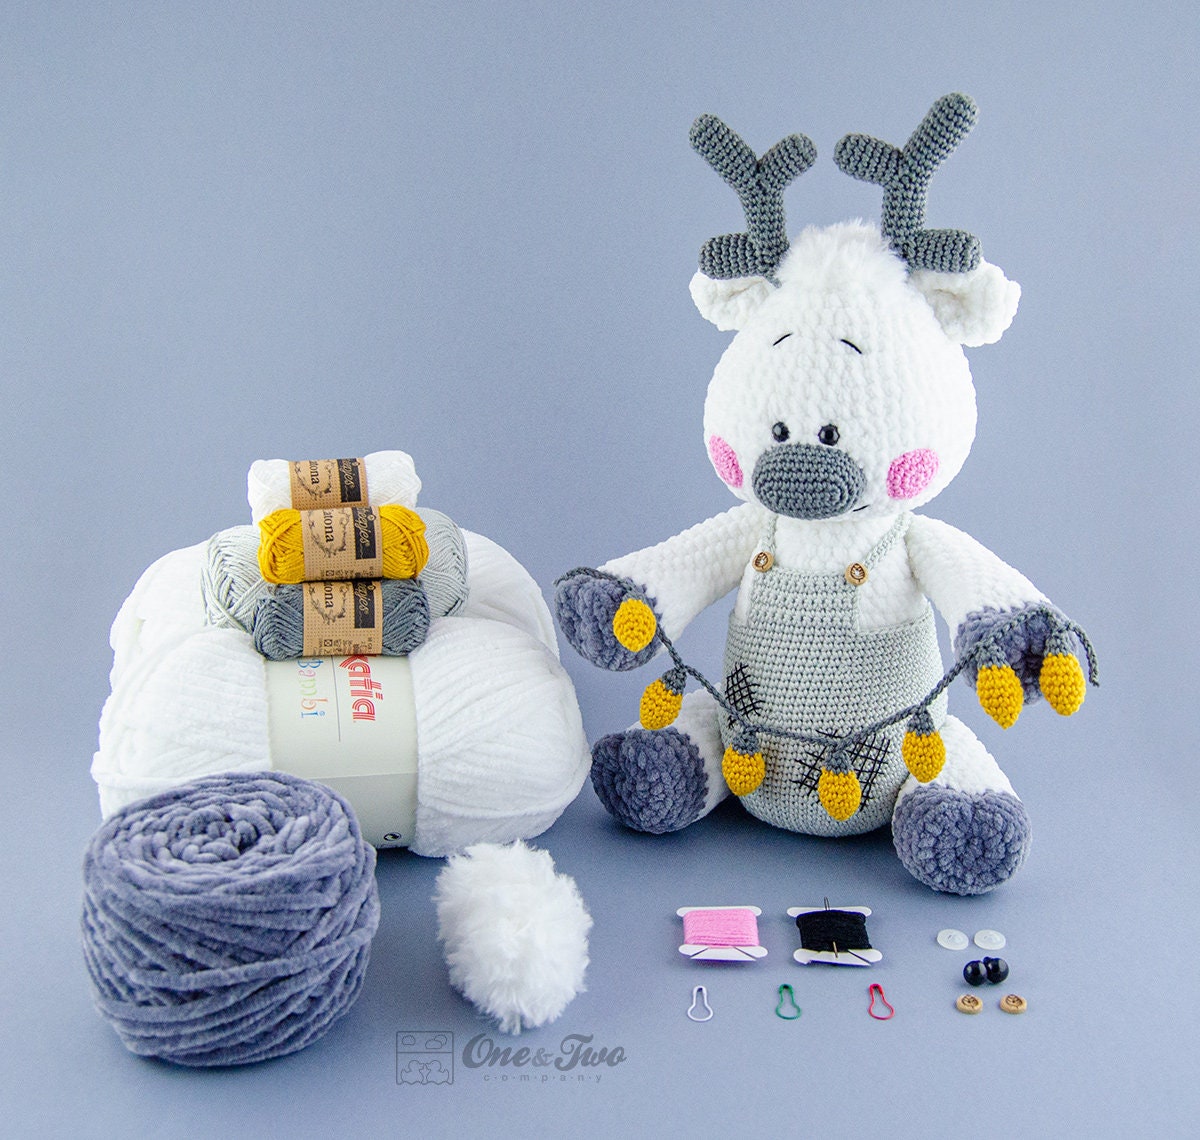 Katia DIY bag kit crochet